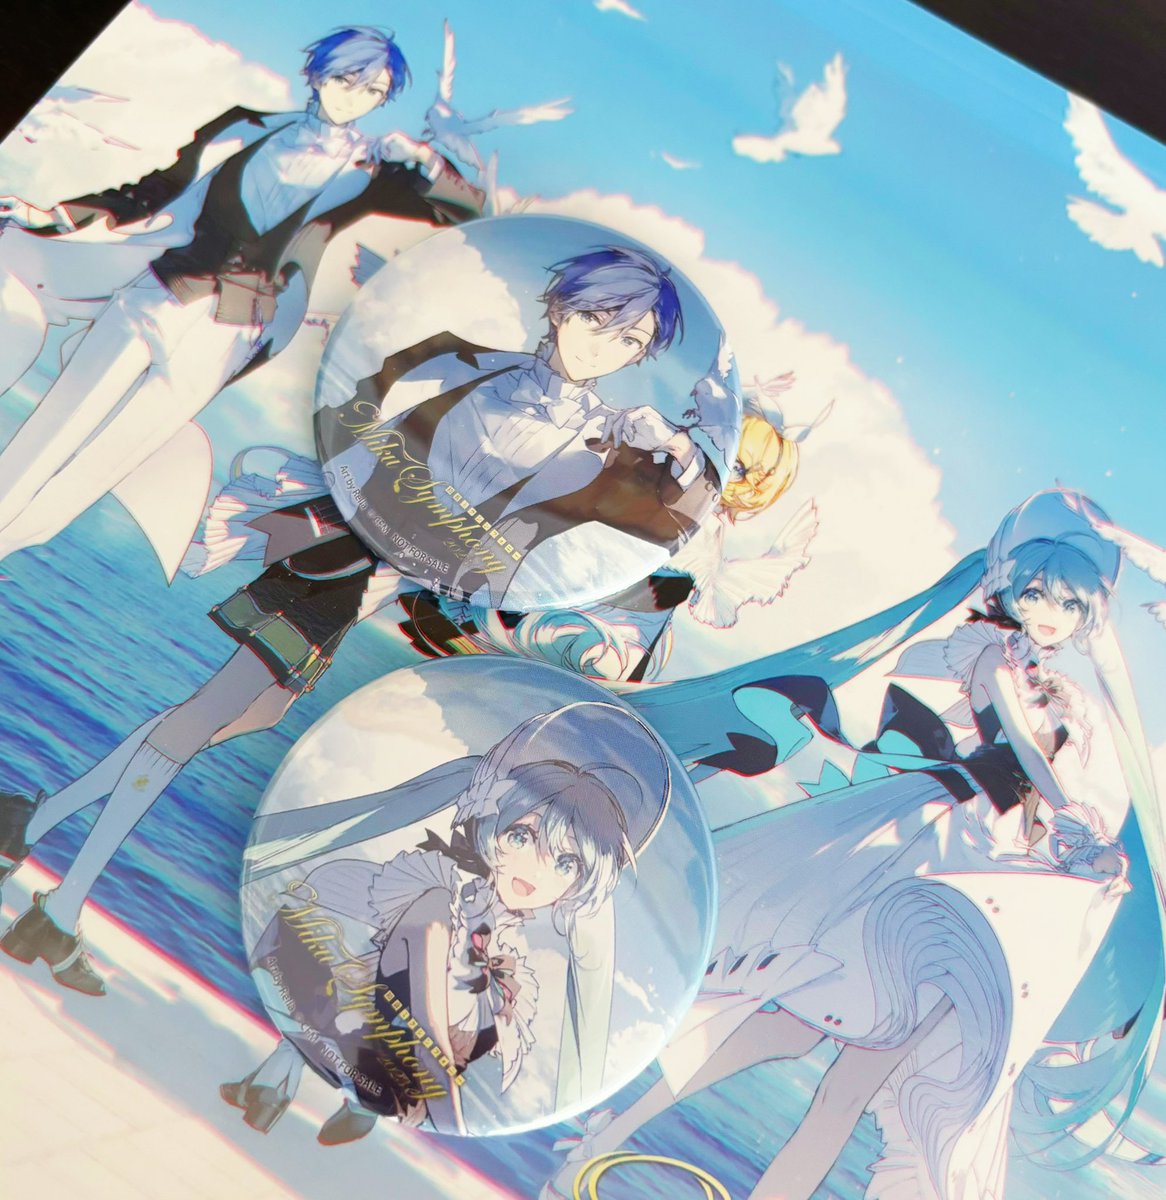 hatsune miku ,kagamine rin ,kaito (vocaloid) twintails 2boys dress blue hair multiple boys sky white bird  illustration images